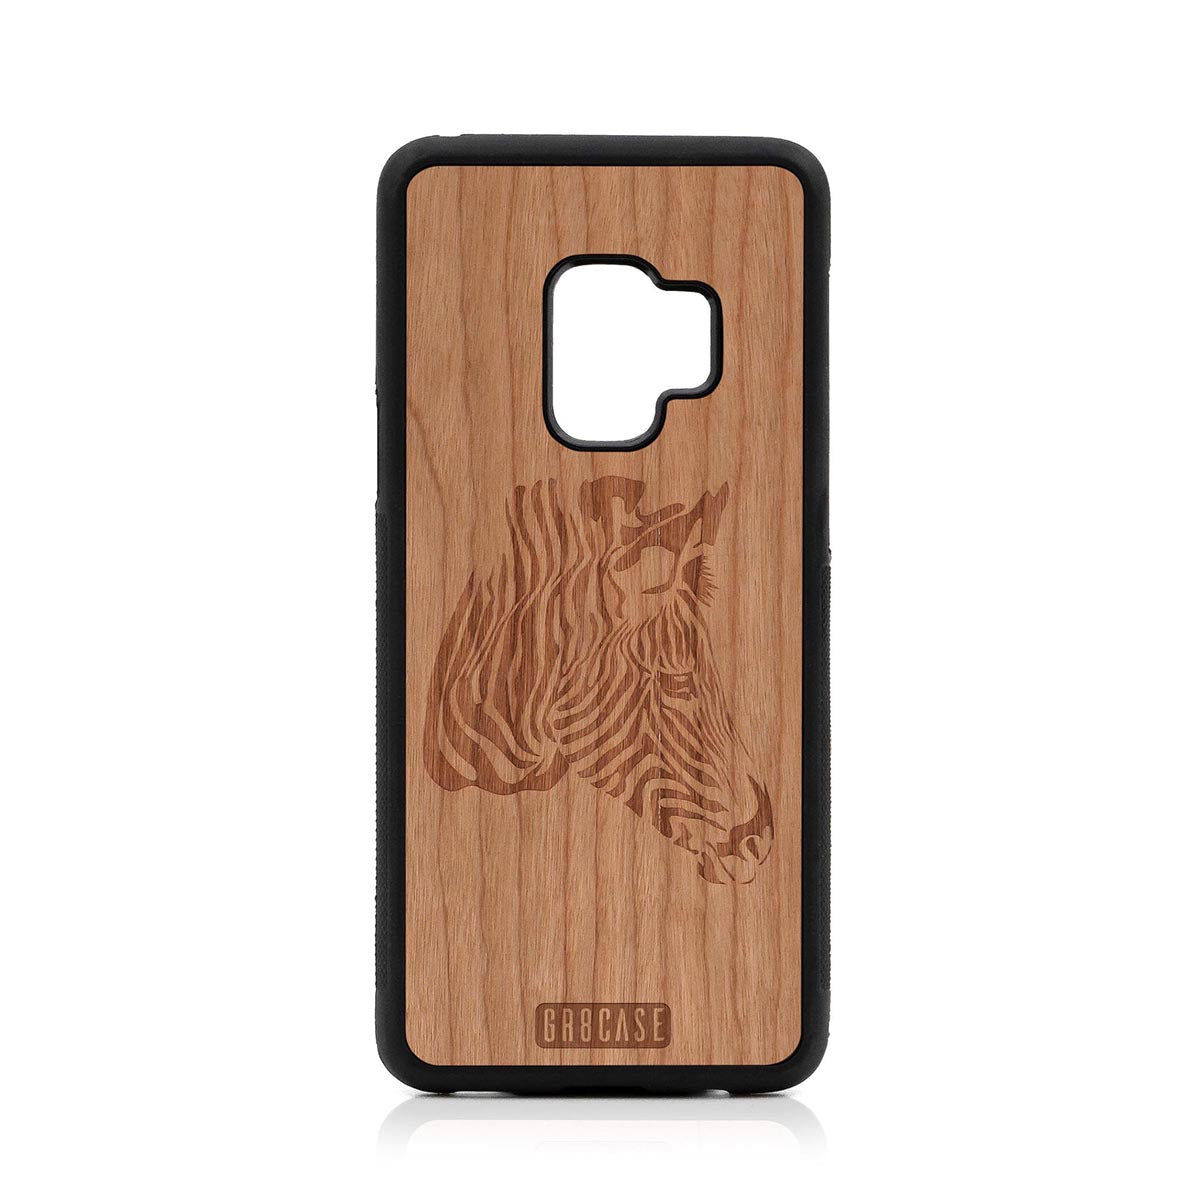 Zebra Design Wood Case For Samsung Galaxy S9